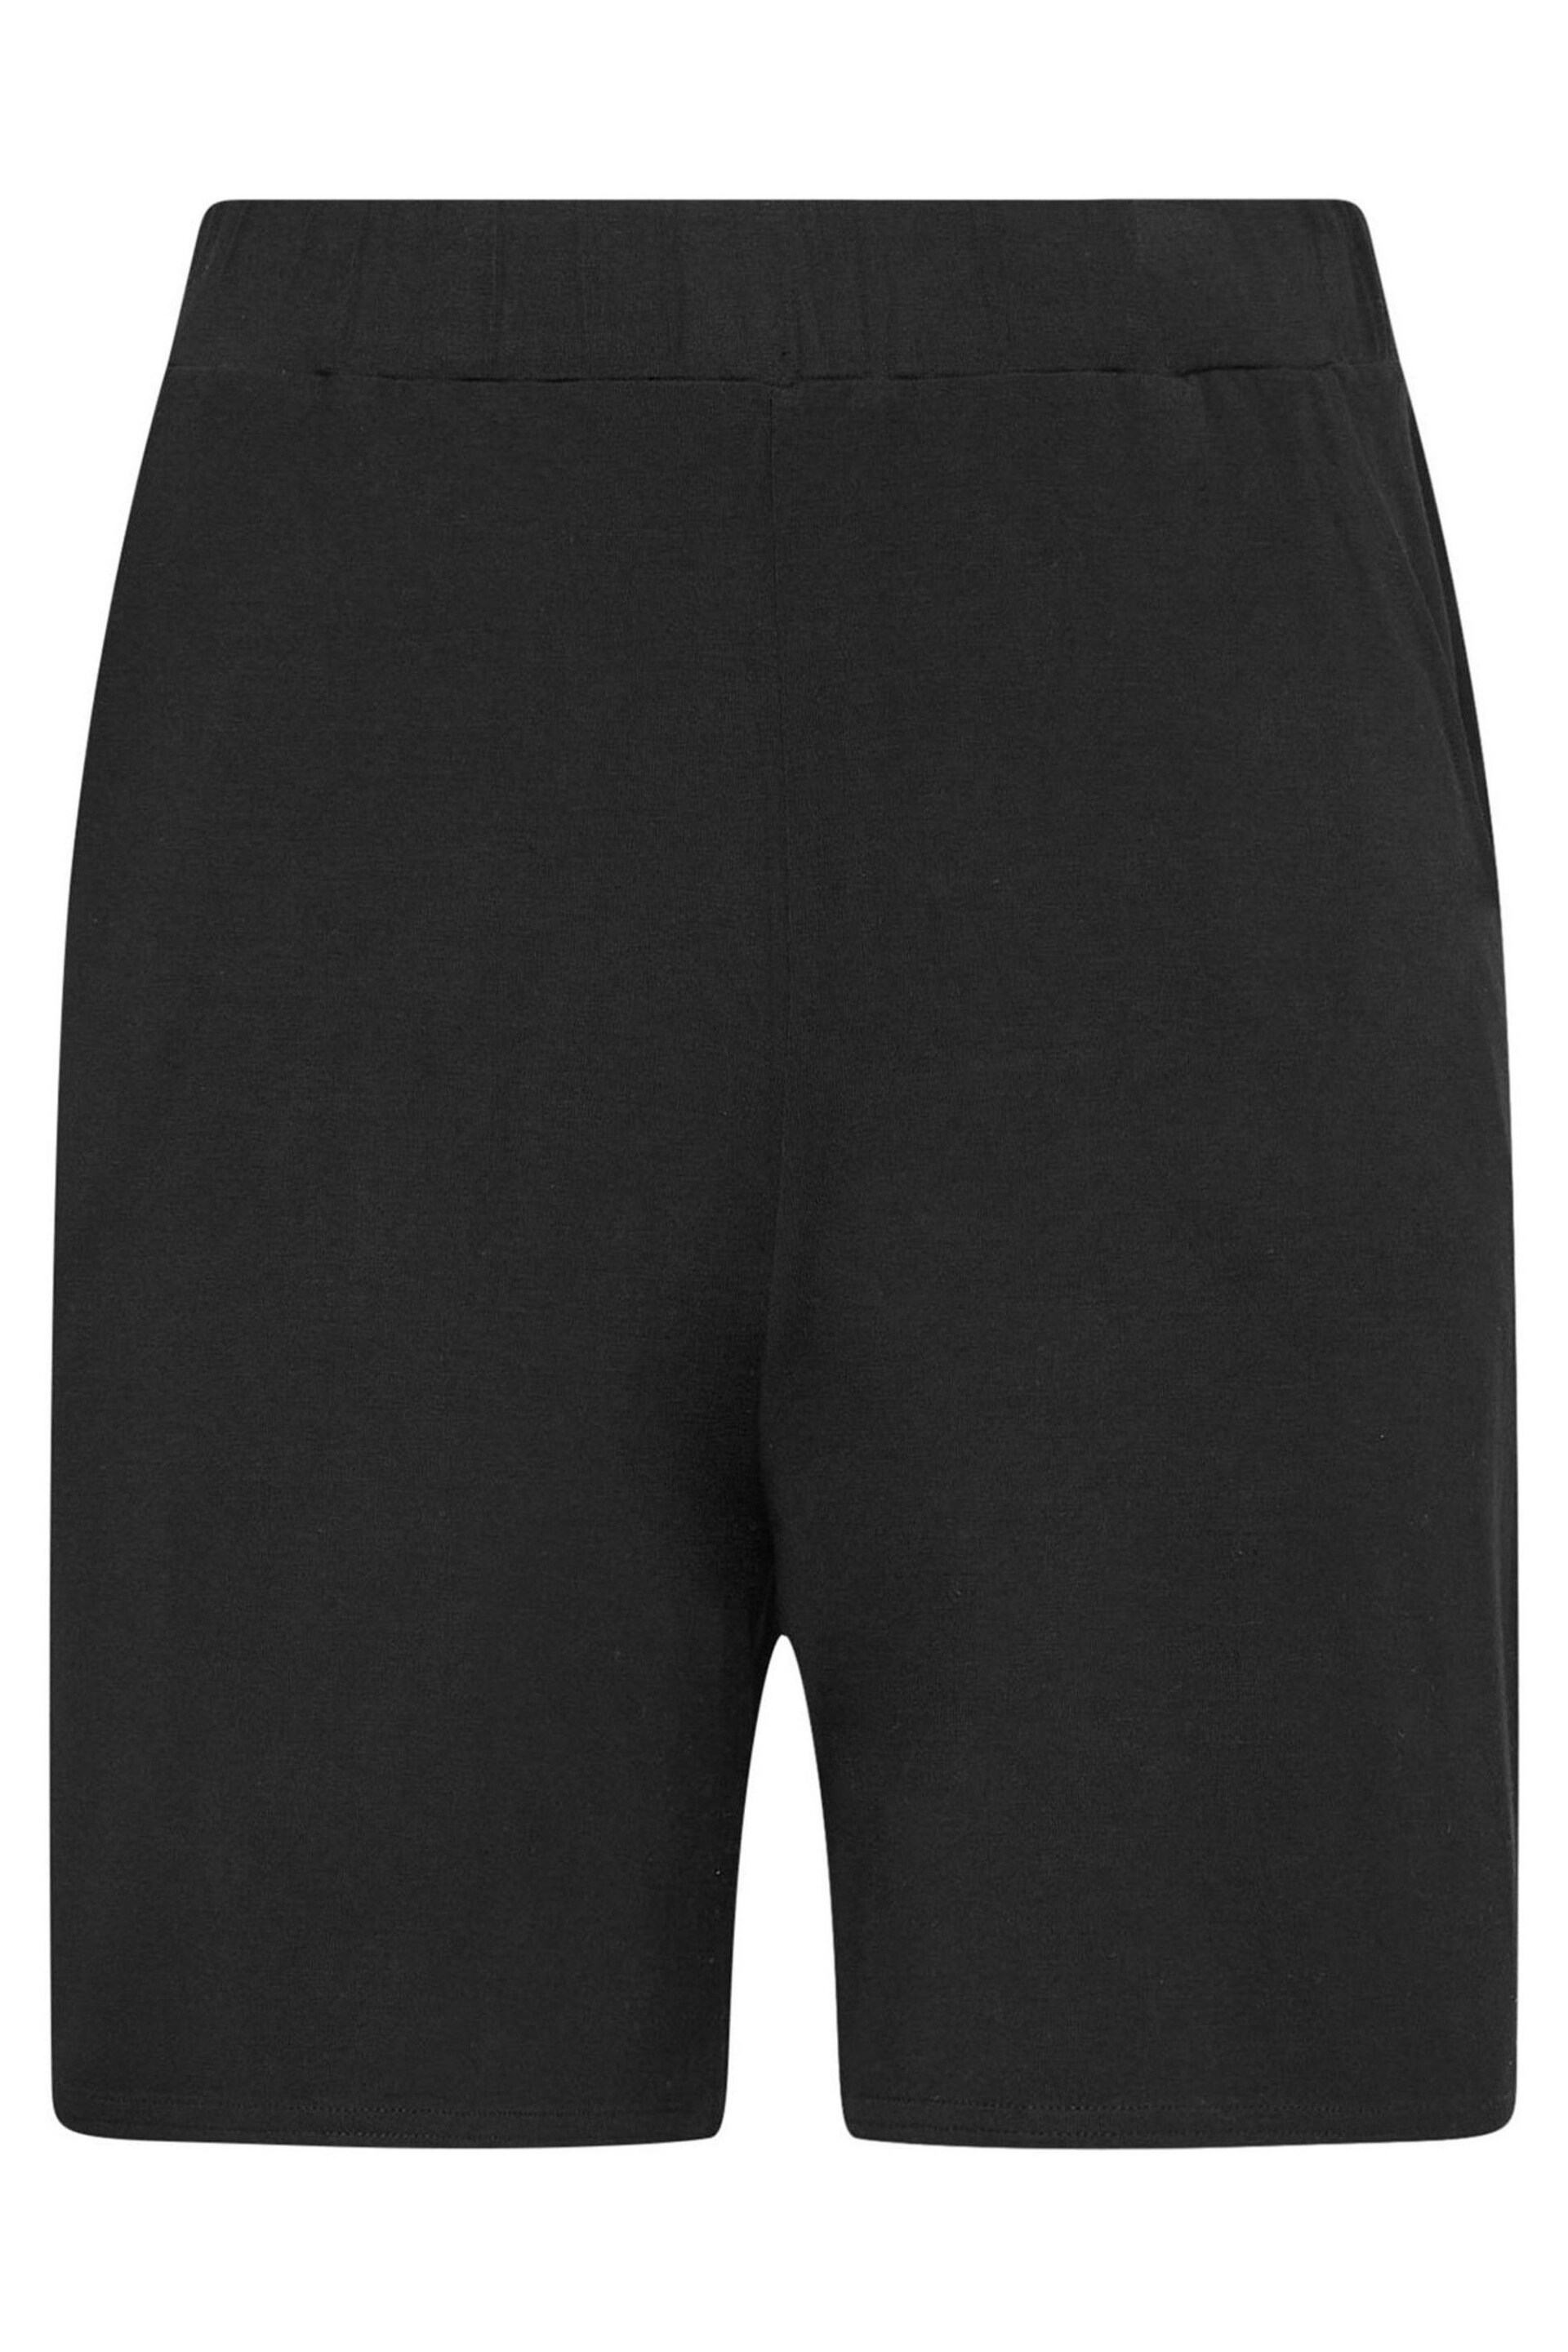 Long Tall Sally Black Jersey Shorts - Image 5 of 5